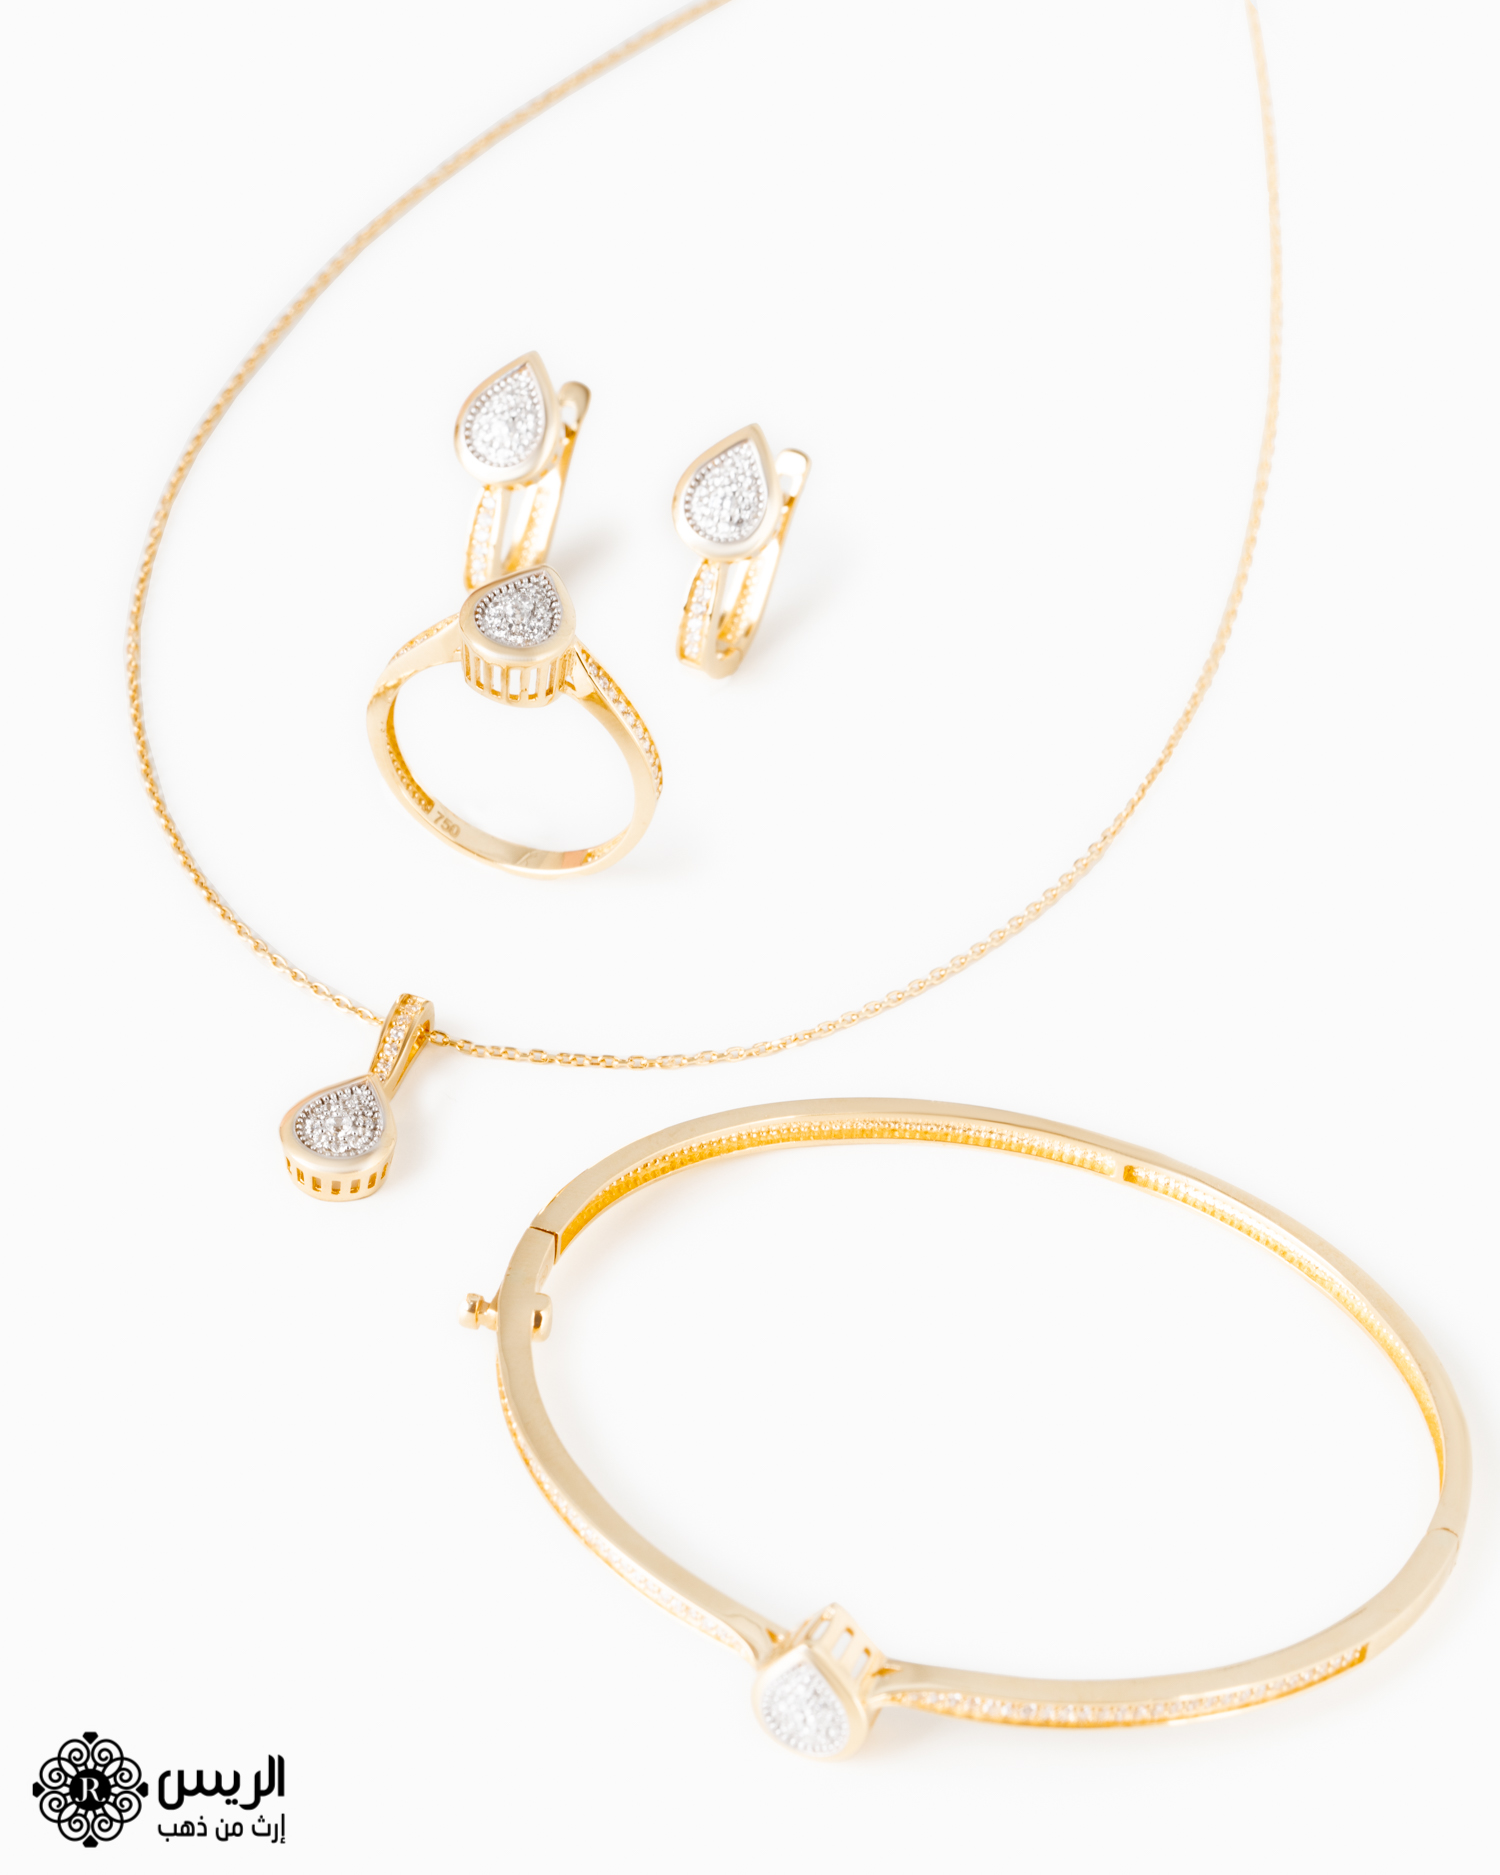 Raies jewelry full set Italian design طقم تصميم إيطالي الريس للمجوهرات